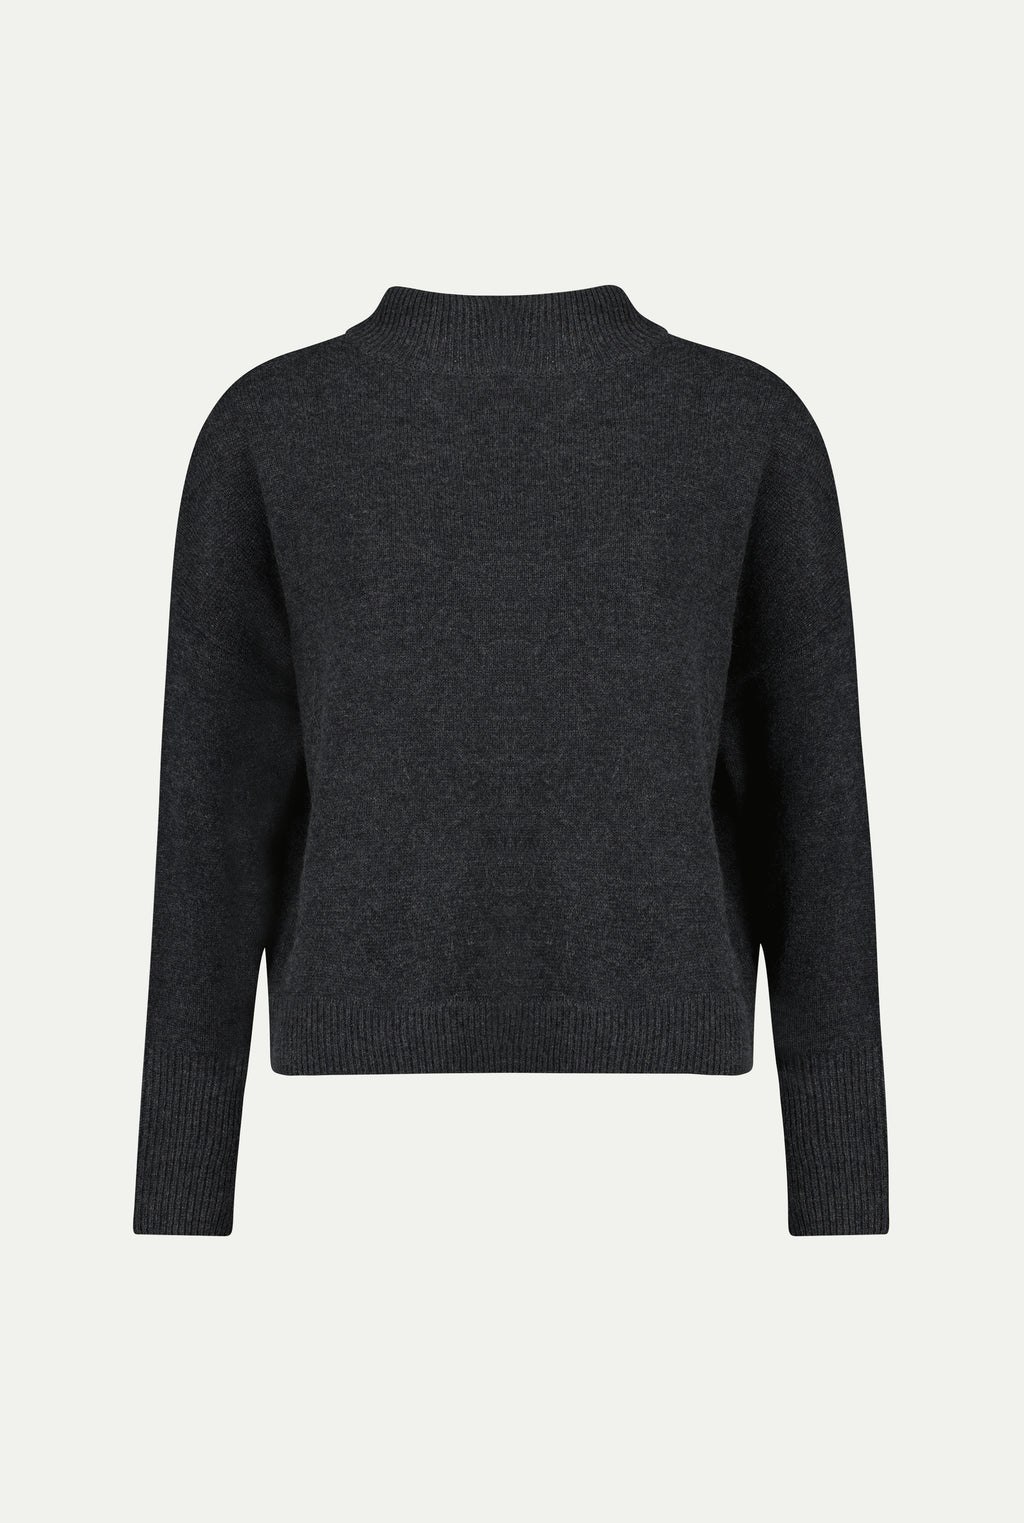 ISLAND cashmere sweater